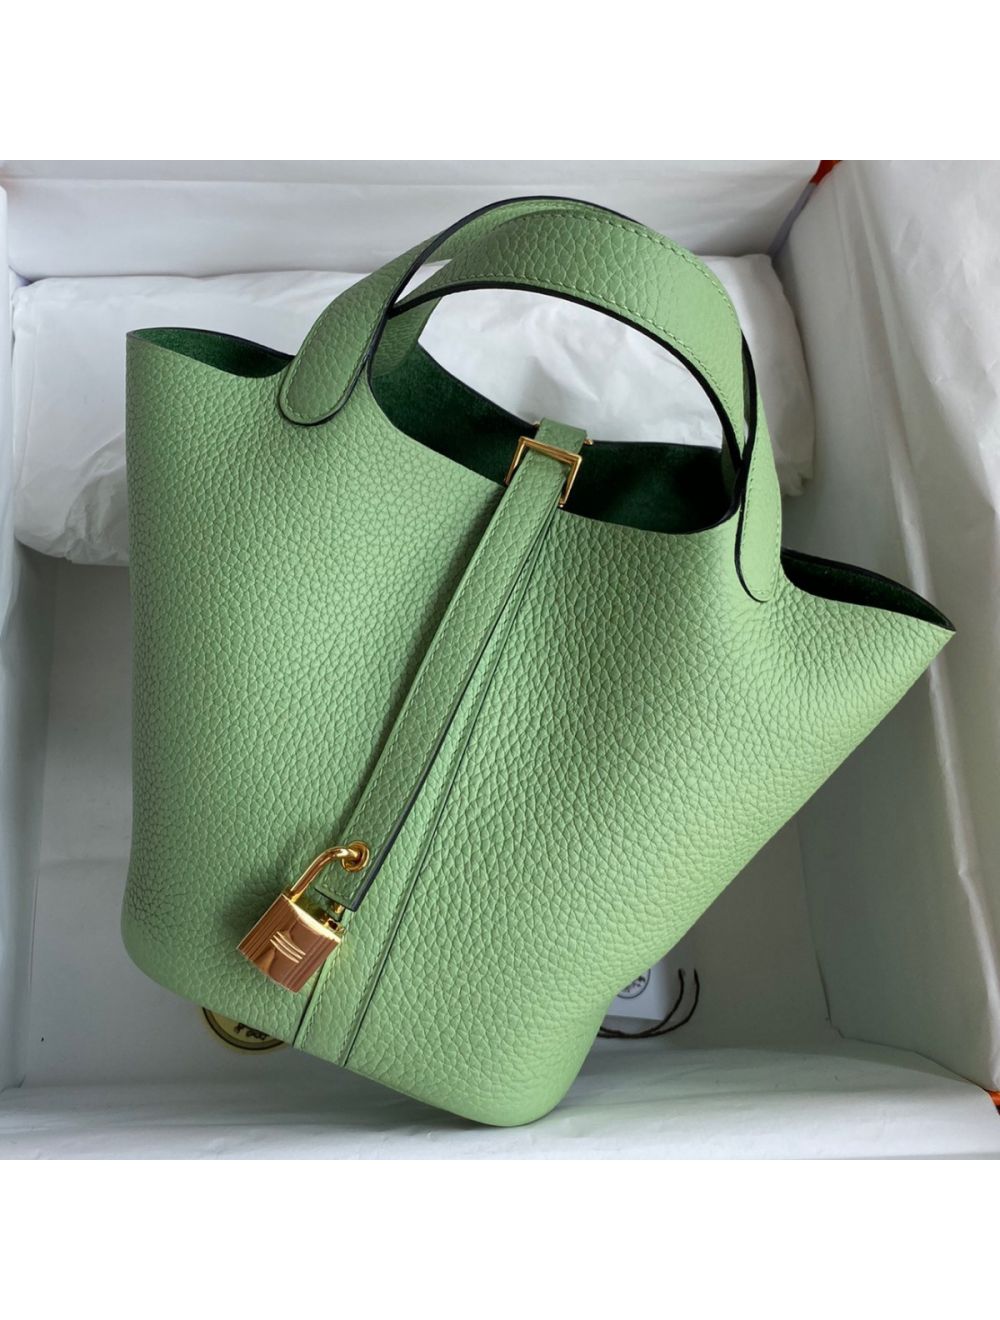 Replica Hermes Picotin Lock 18 Bag In Vert Vertigo Clemence Leather